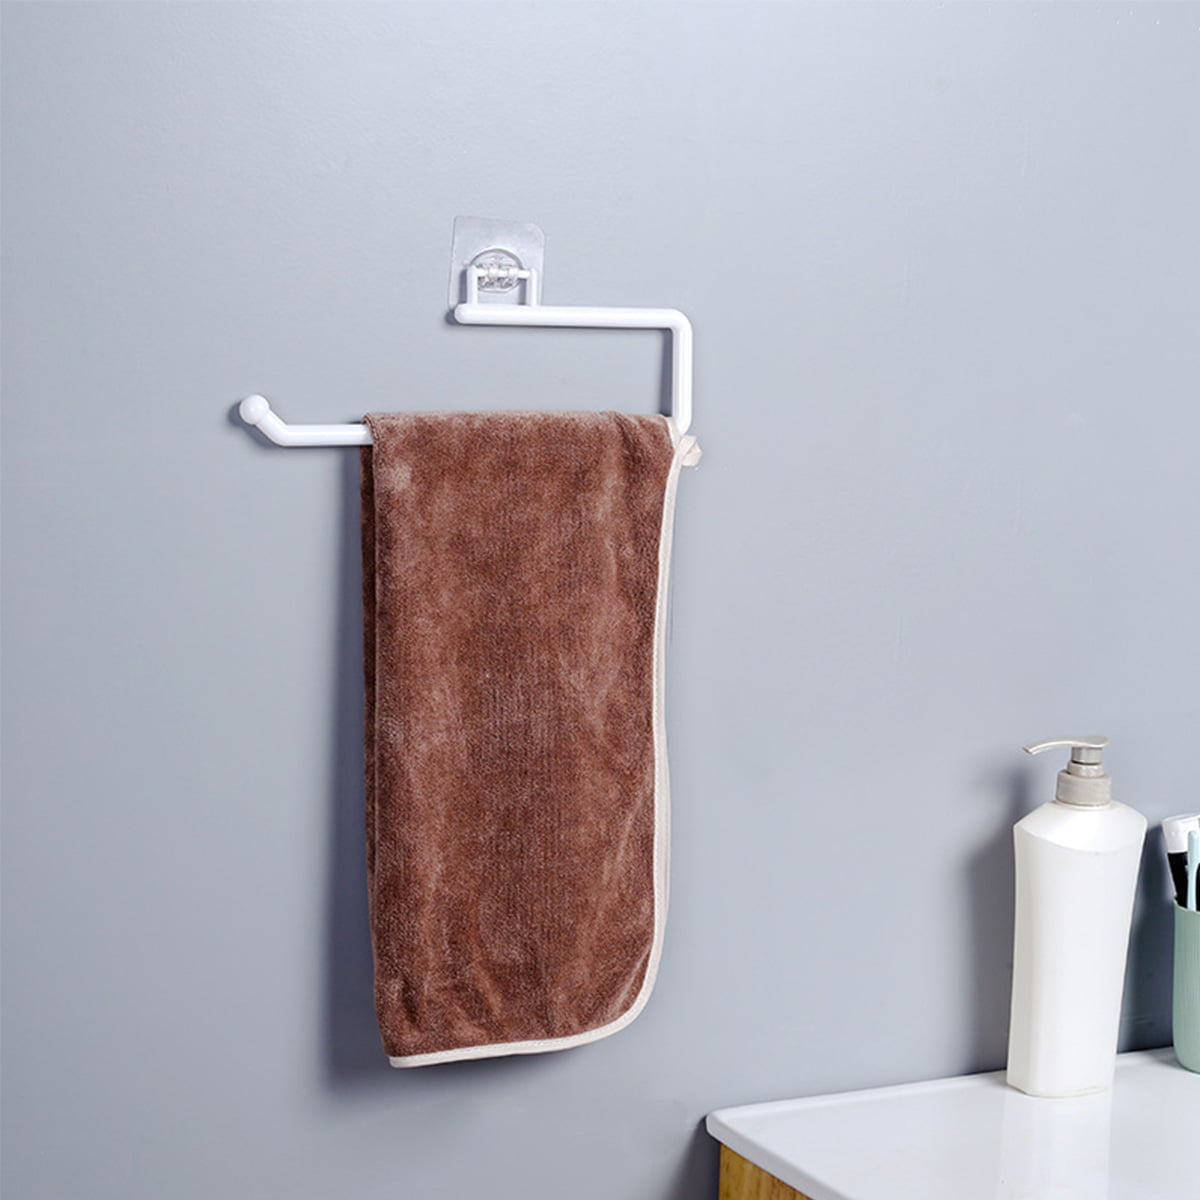 widshovx Paper Towel Holder Wall Mount Paper Towel Rack Self Adhesive Under  Cabinet Paper Towel Holder 11.2 Inch Toilet Paper Holder for Kitchen